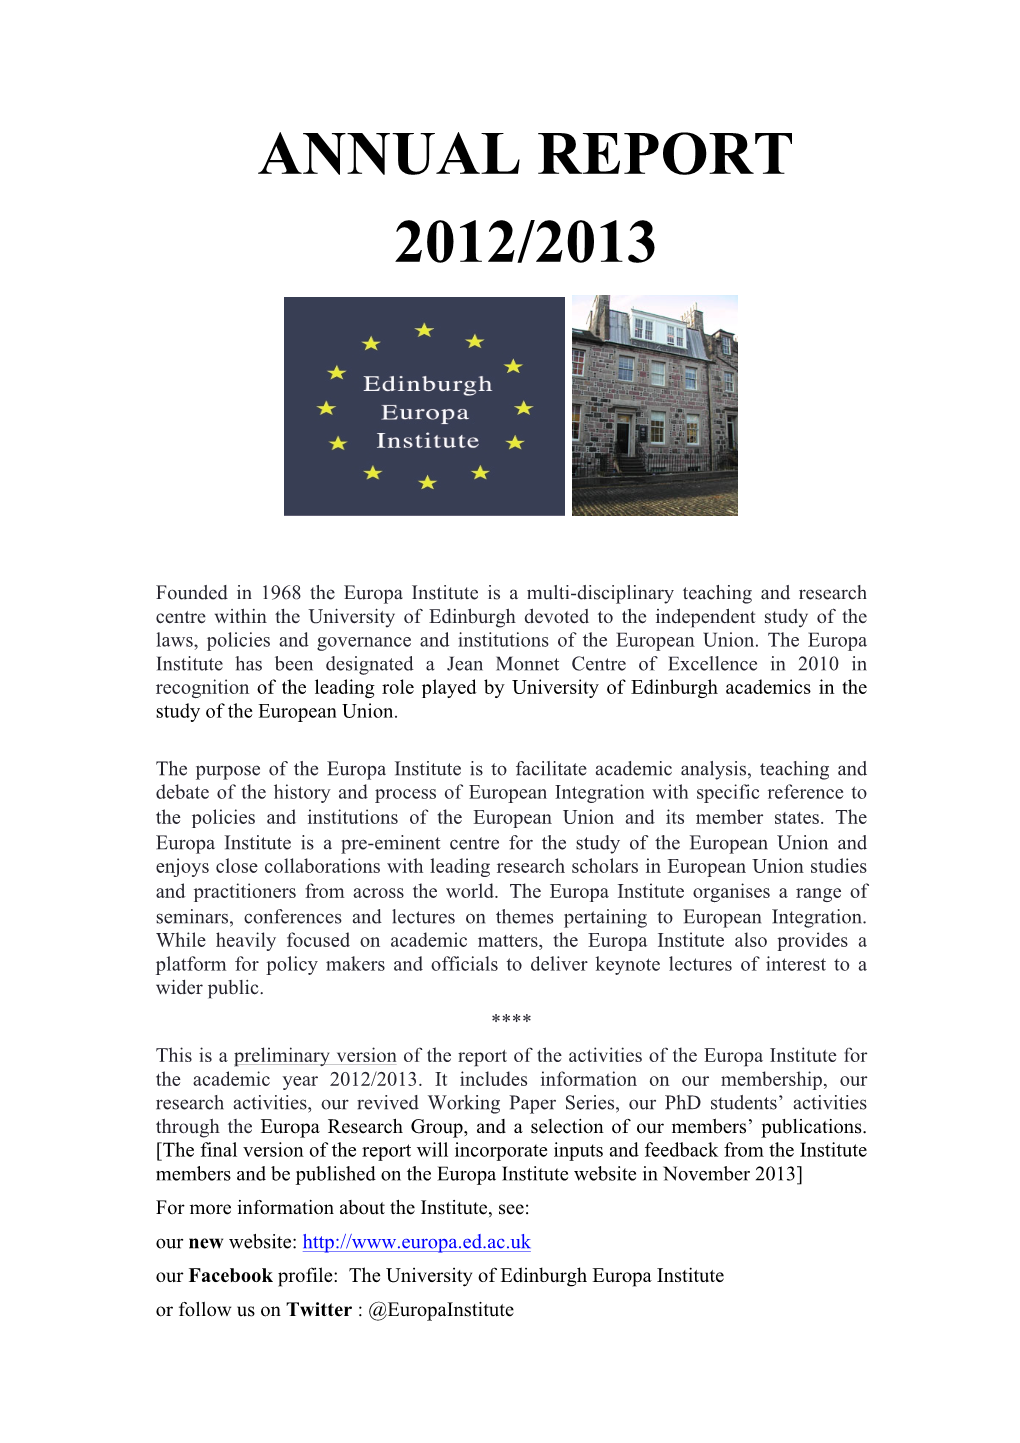 Europa Institute Annual Report 2012/2013